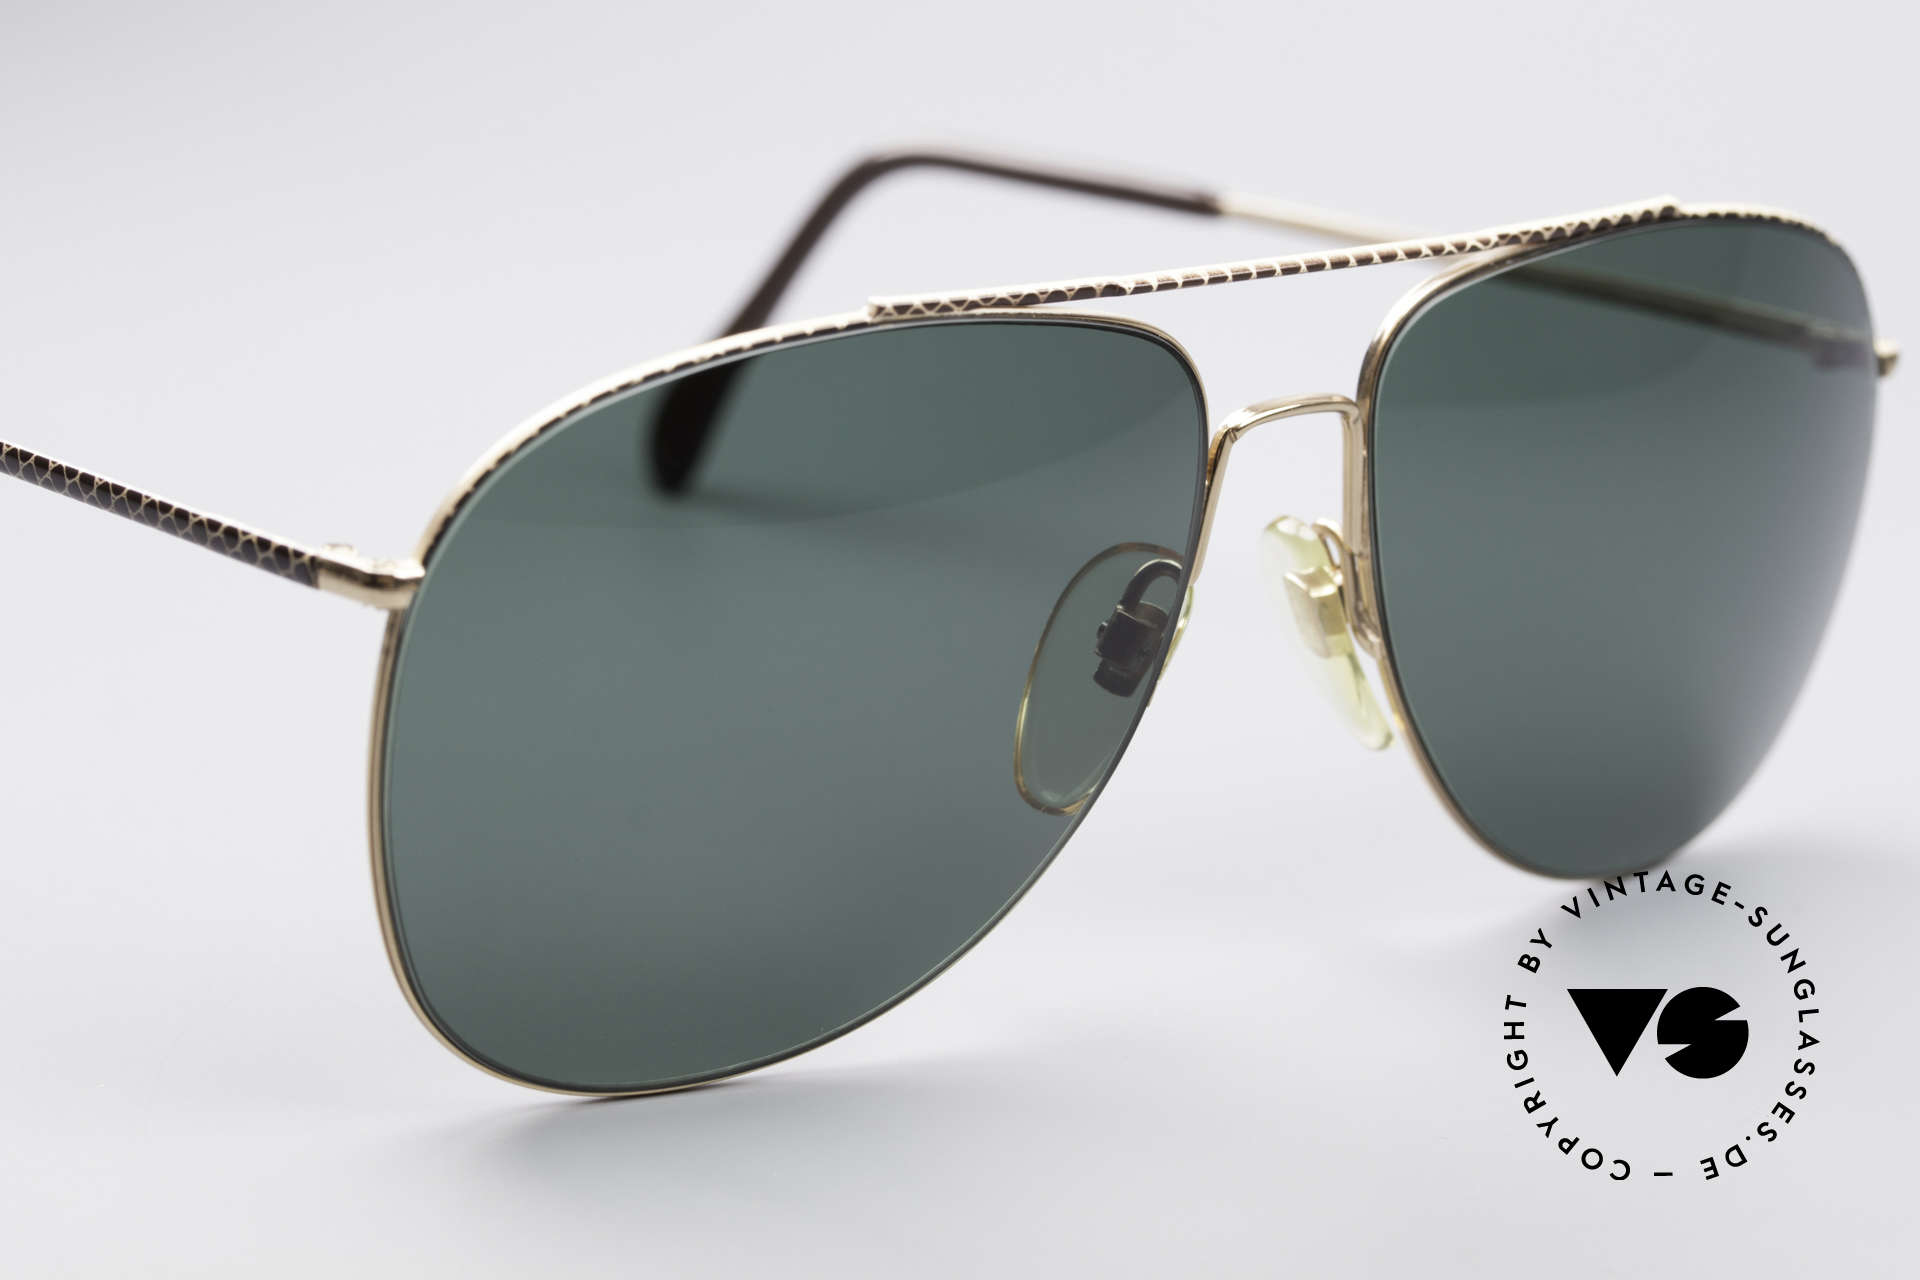 Sunglasses Neostyle Academic 300 80's Vintage Shades